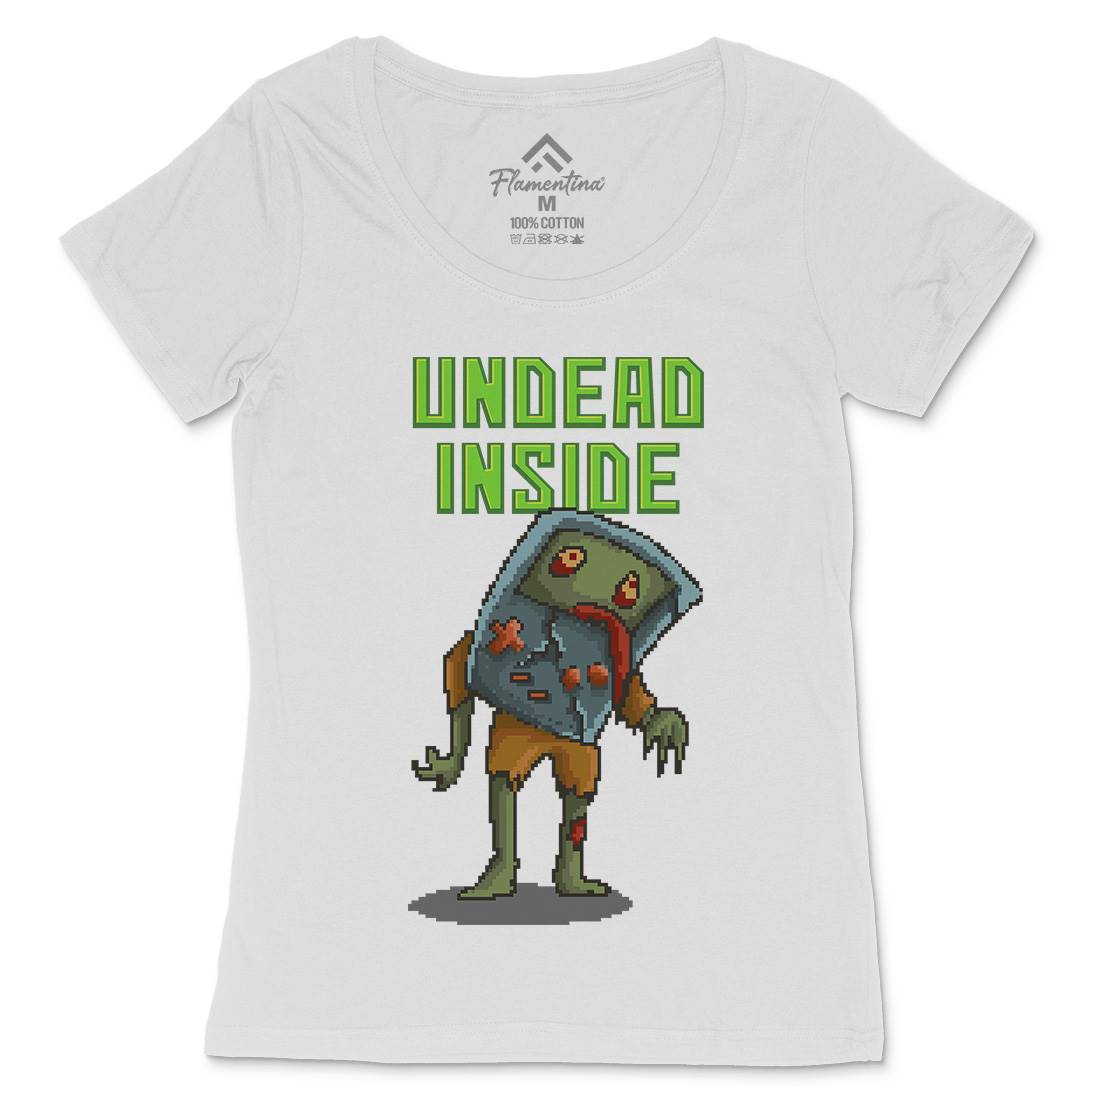 Undead Inside Womens Scoop Neck T-Shirt Geek B973